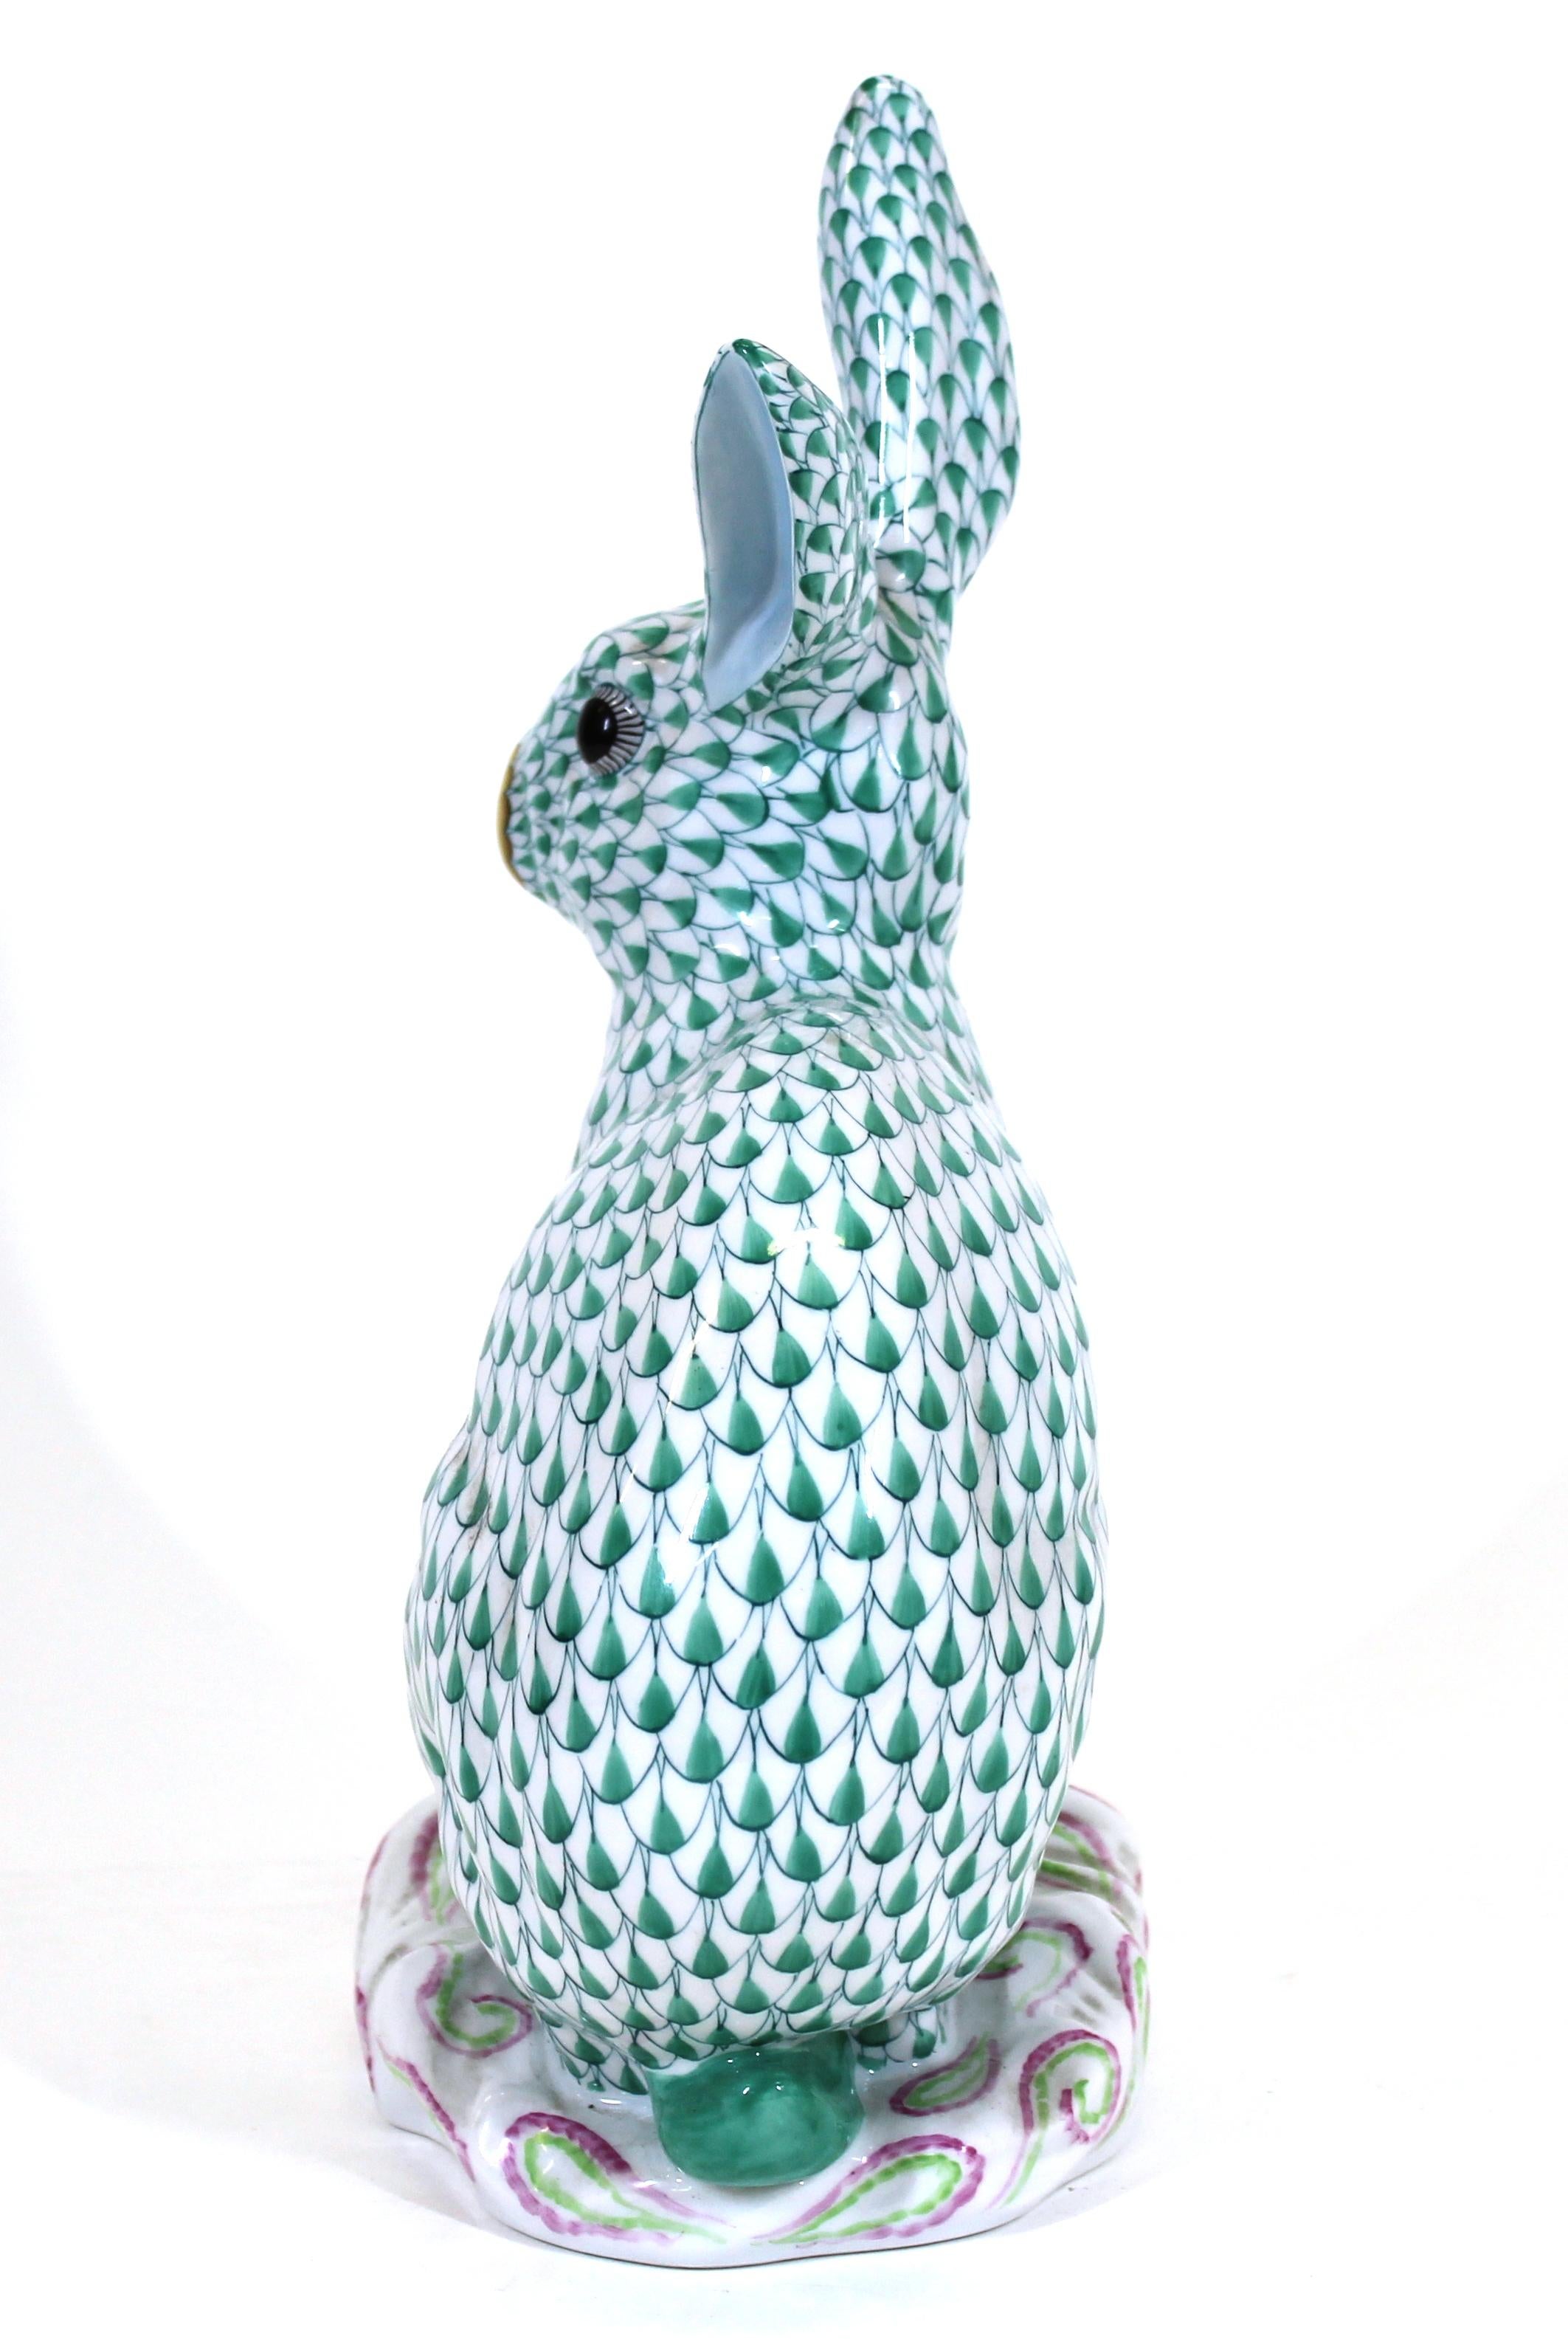 Hungarian Herend Hungary Porcelain Rabbit Figure